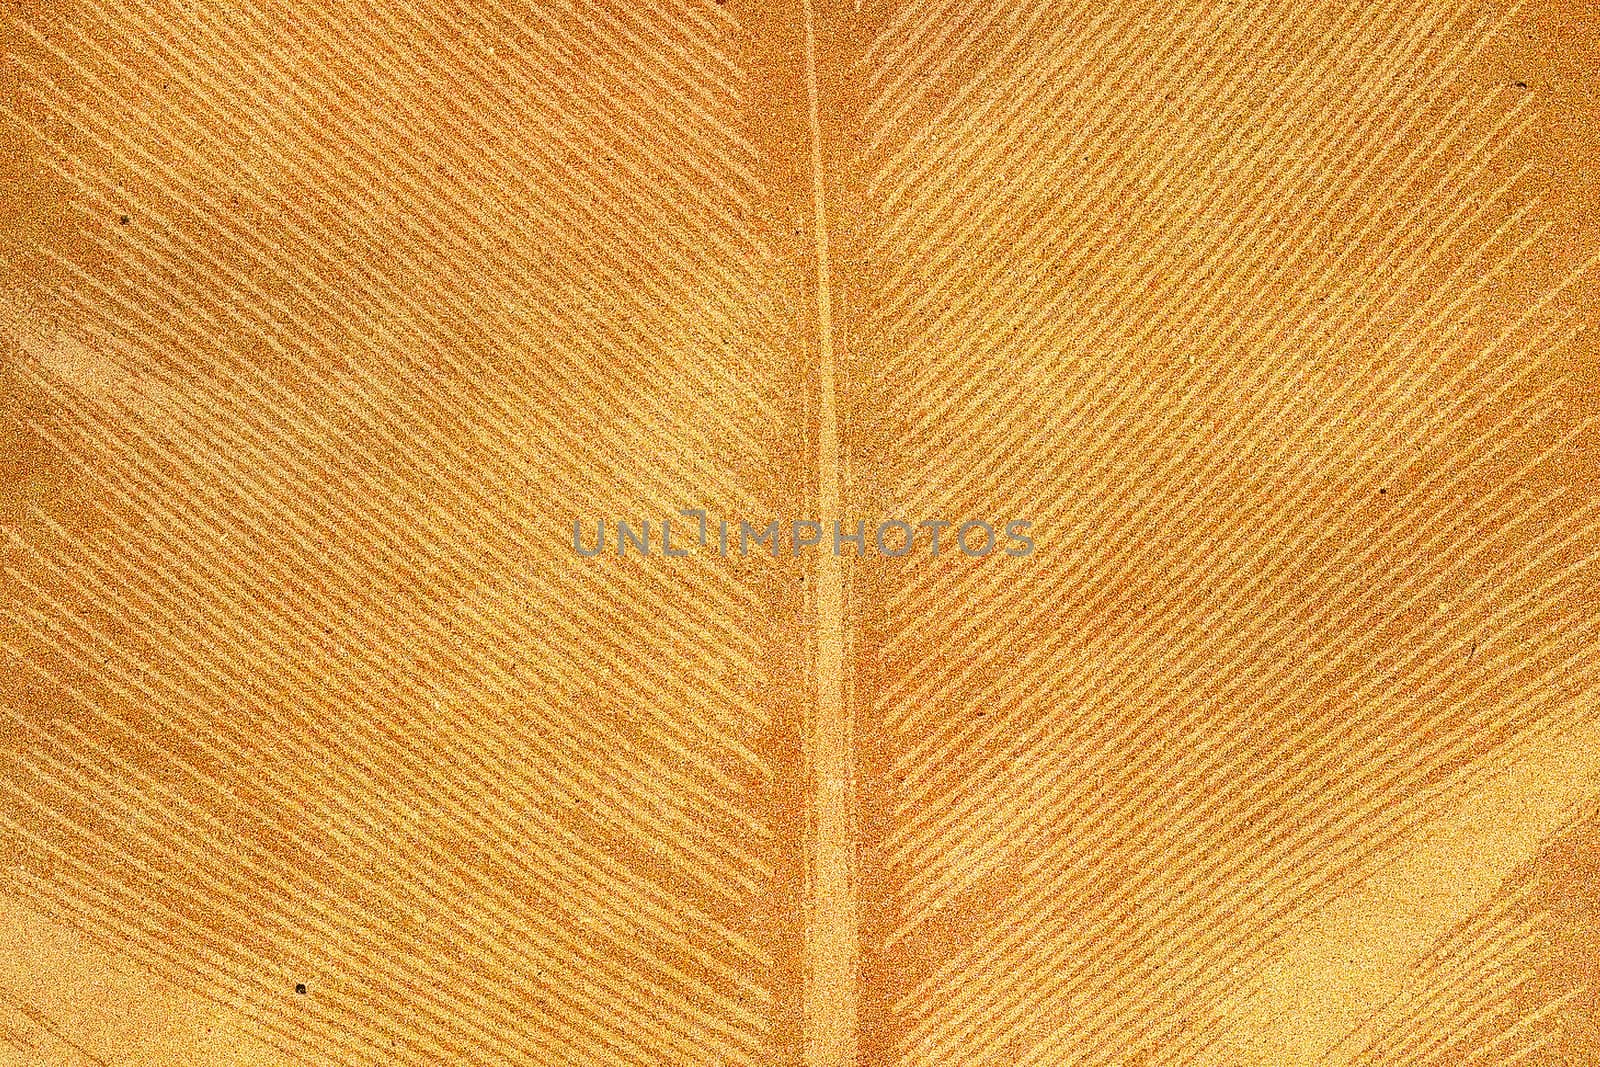 Palm leaf textured on grunge paper background by jakgree